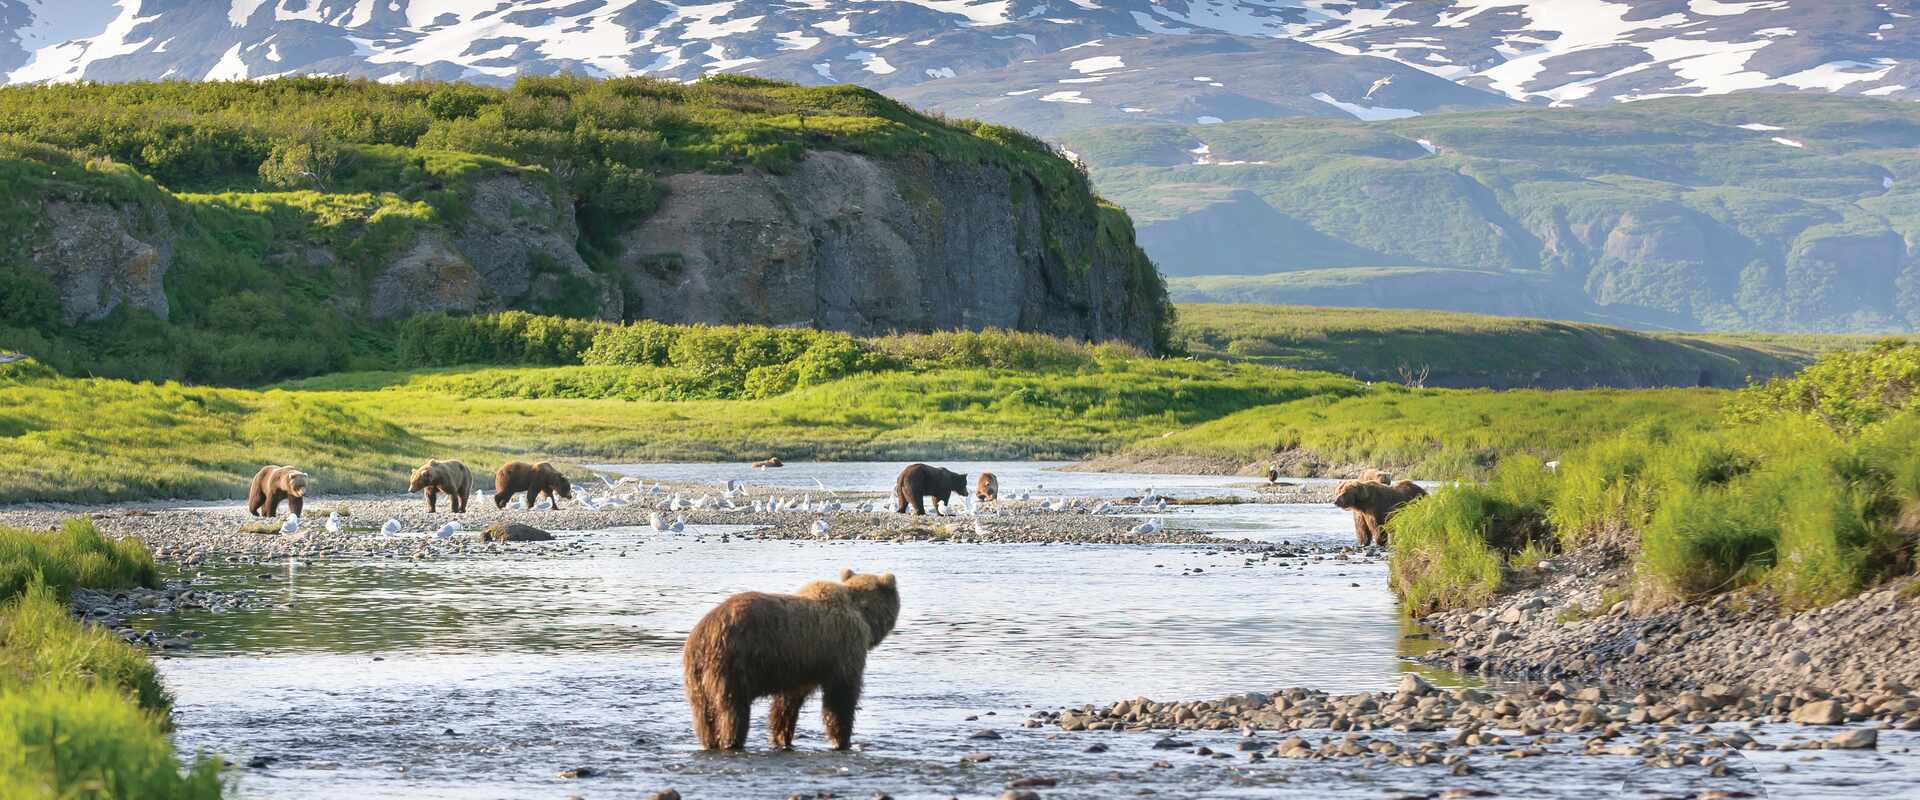 grizzly bear river mountains alaska 12 5